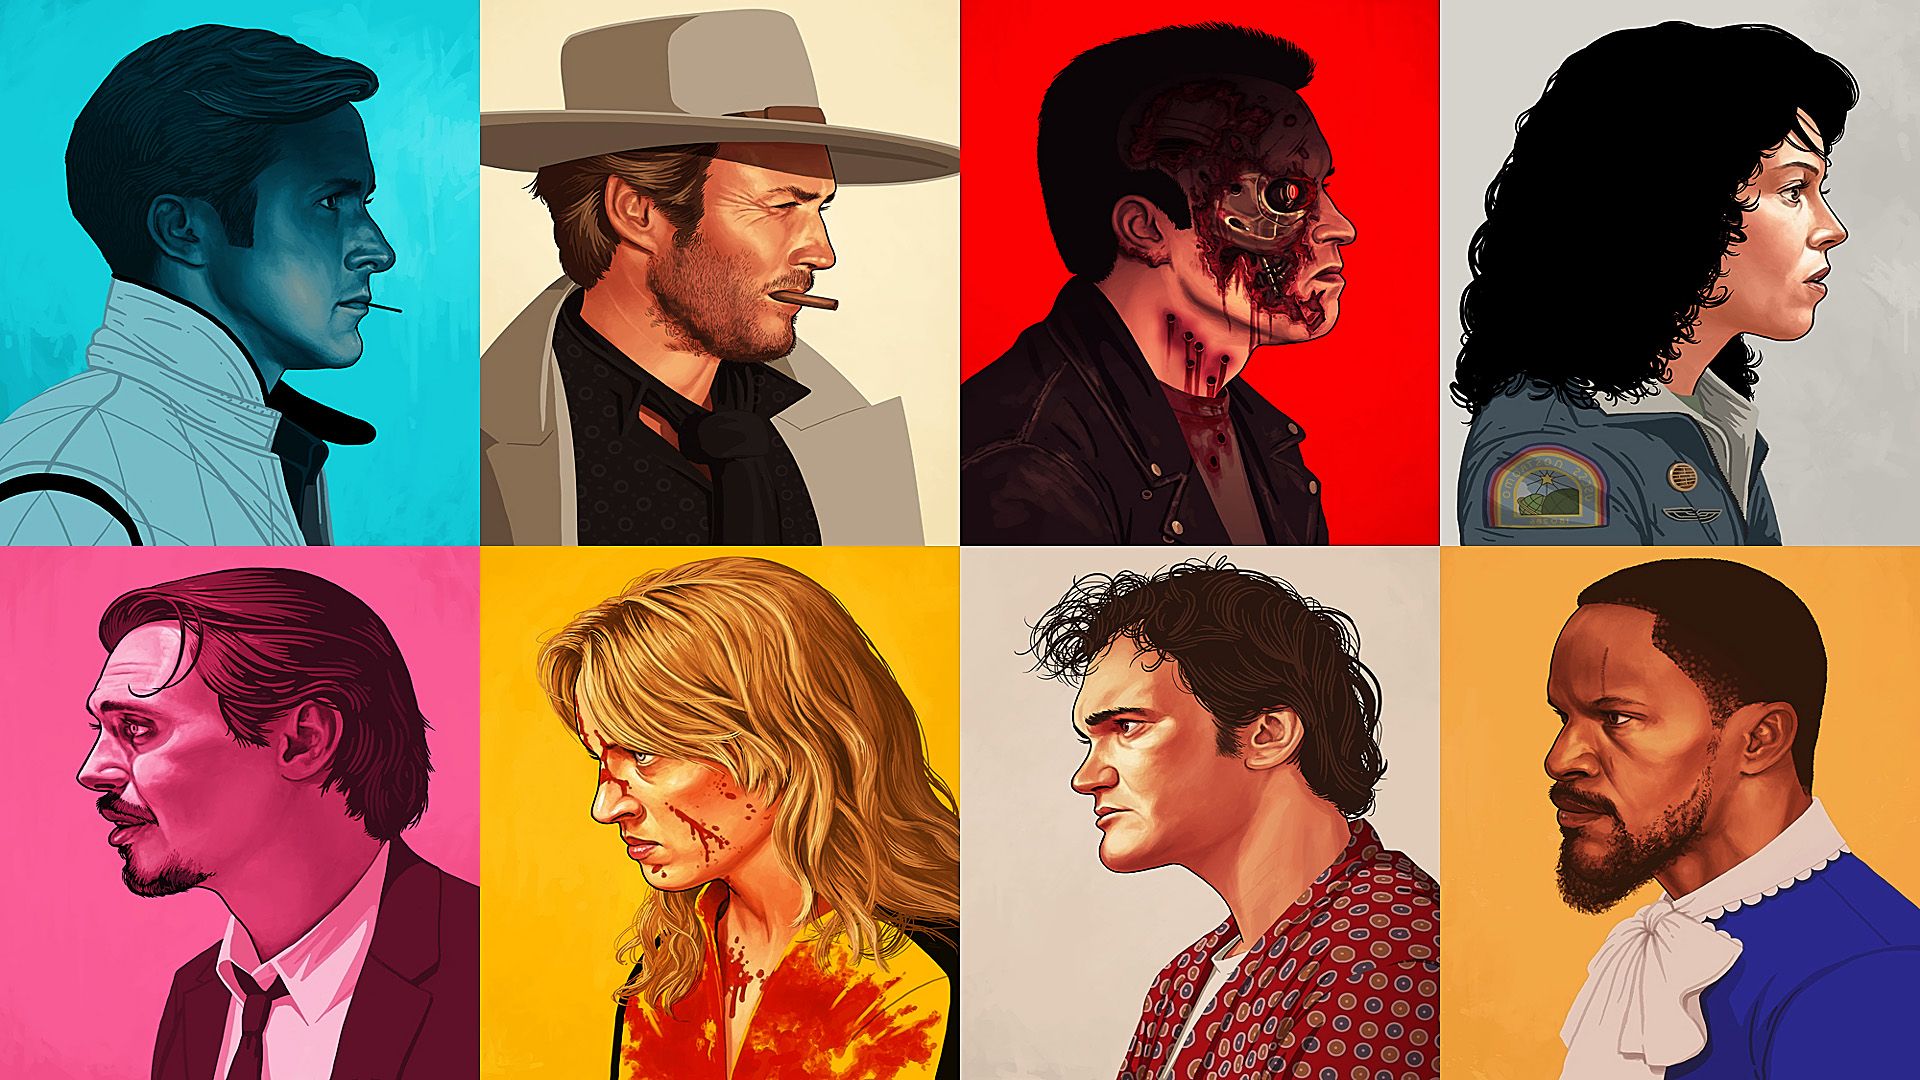 74+] Quentin Tarantino Wallpaper - WallpaperSafari